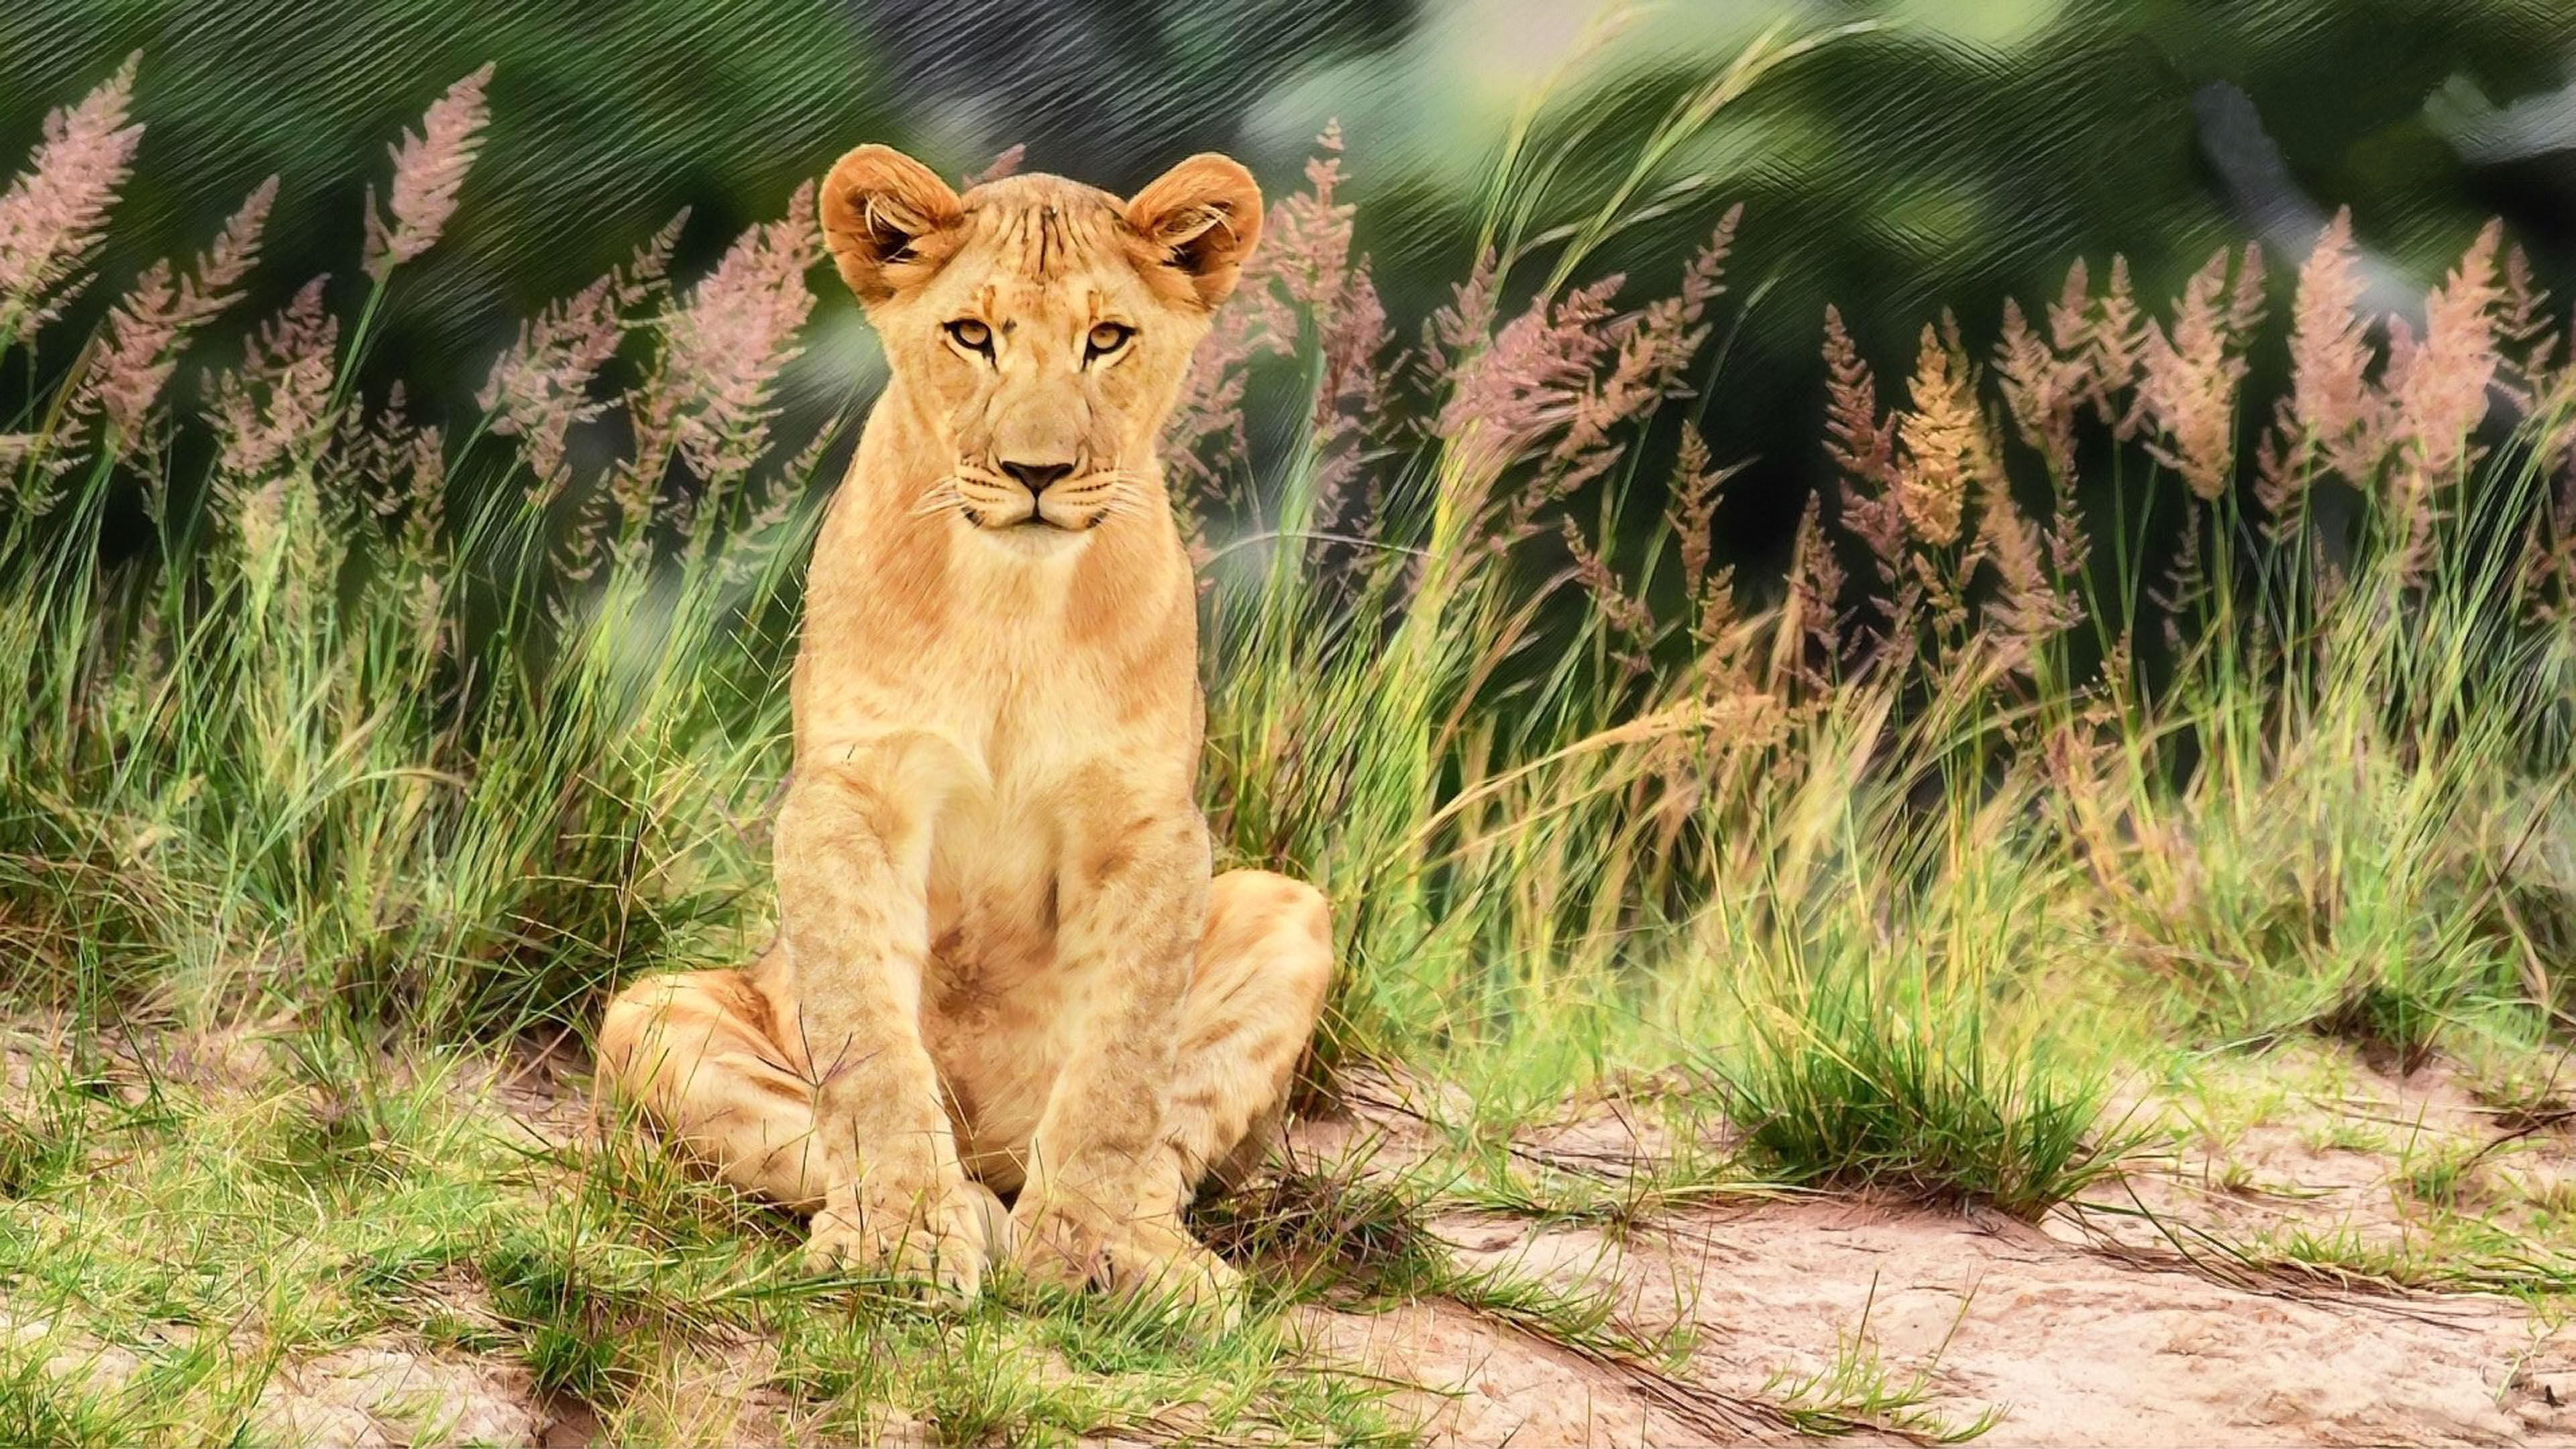 Wild Animal Young Male Lion 4k Ultra Hd Tv Wallpaper For Desktop Laptop